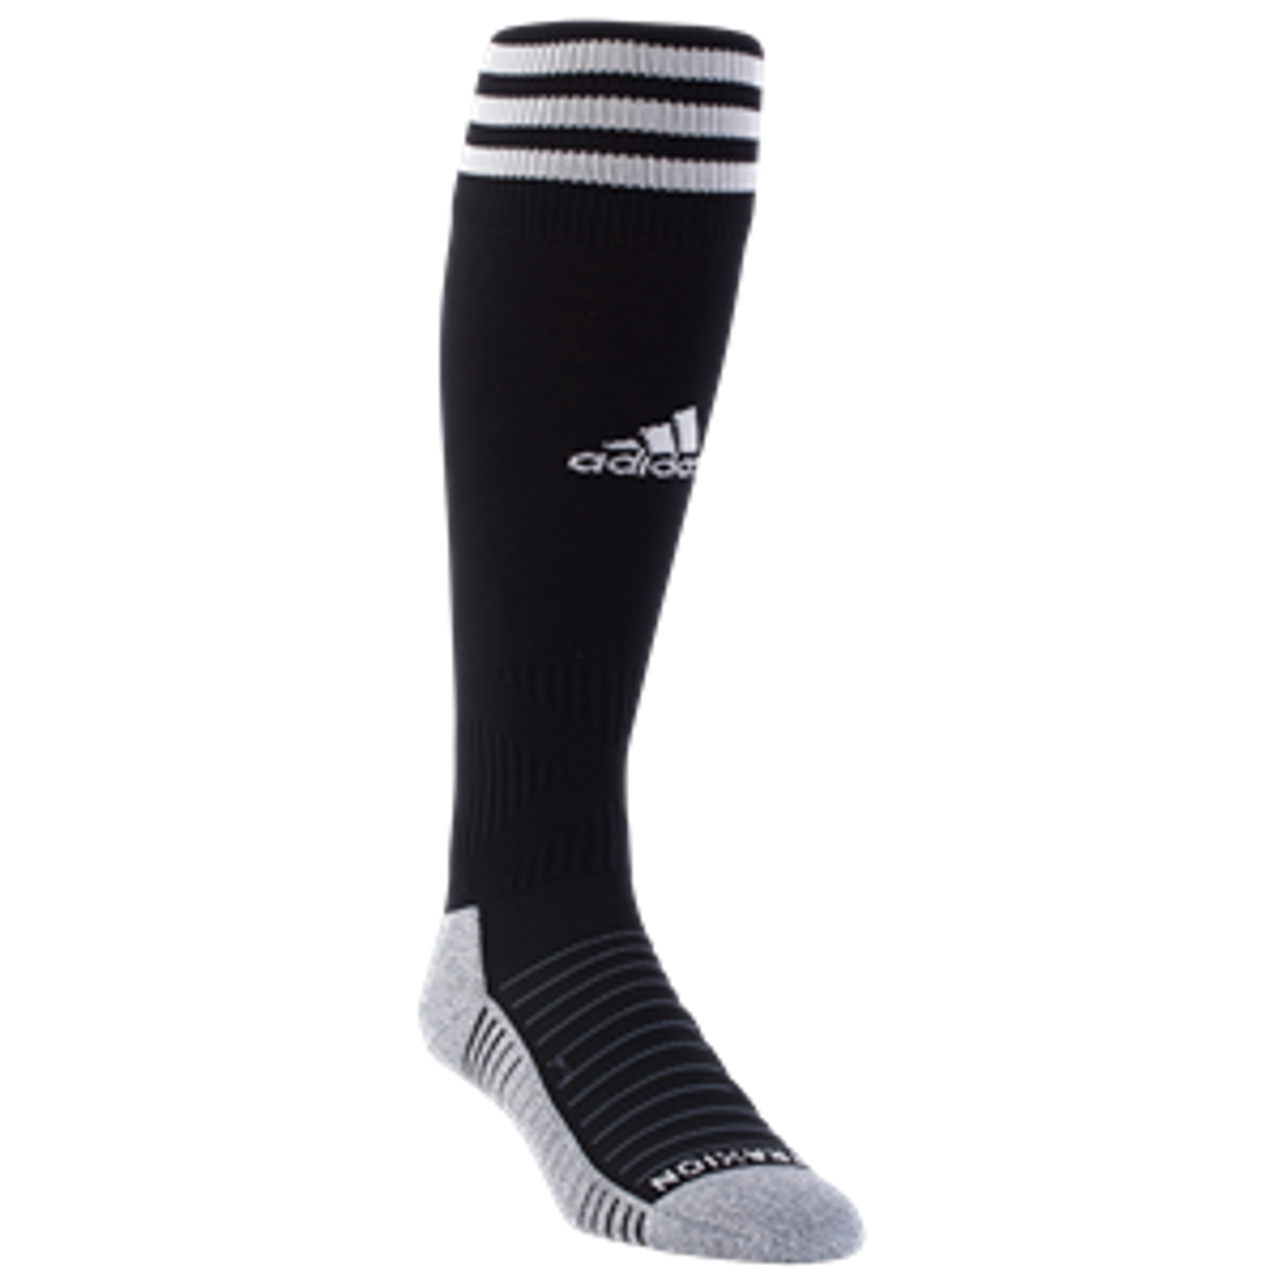 adidas copa zone iii soccer socks white